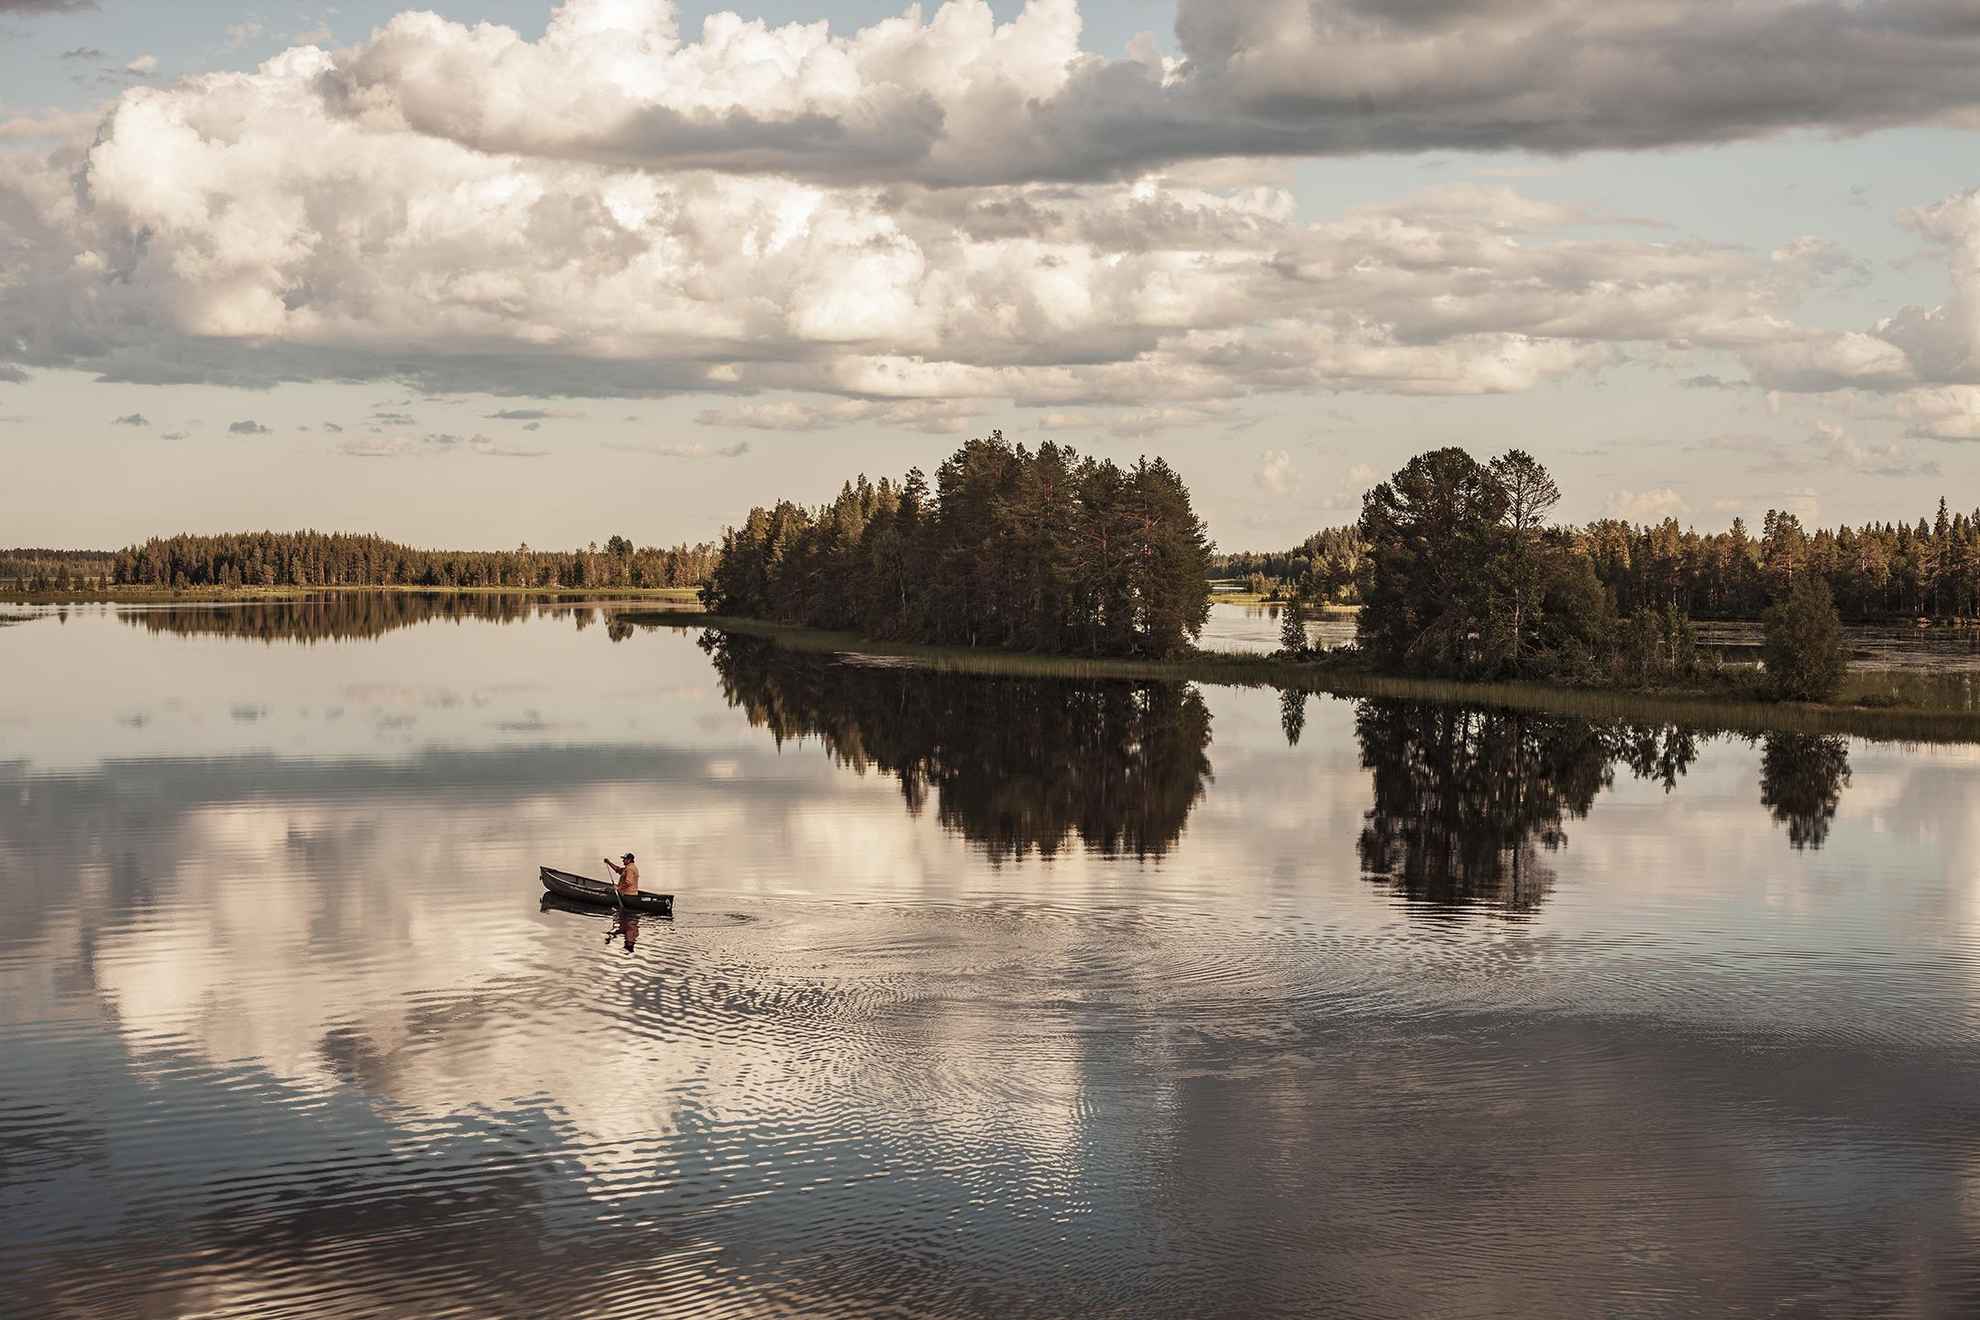 Kanoën op de rivier Juktån in Swedish Lapland.